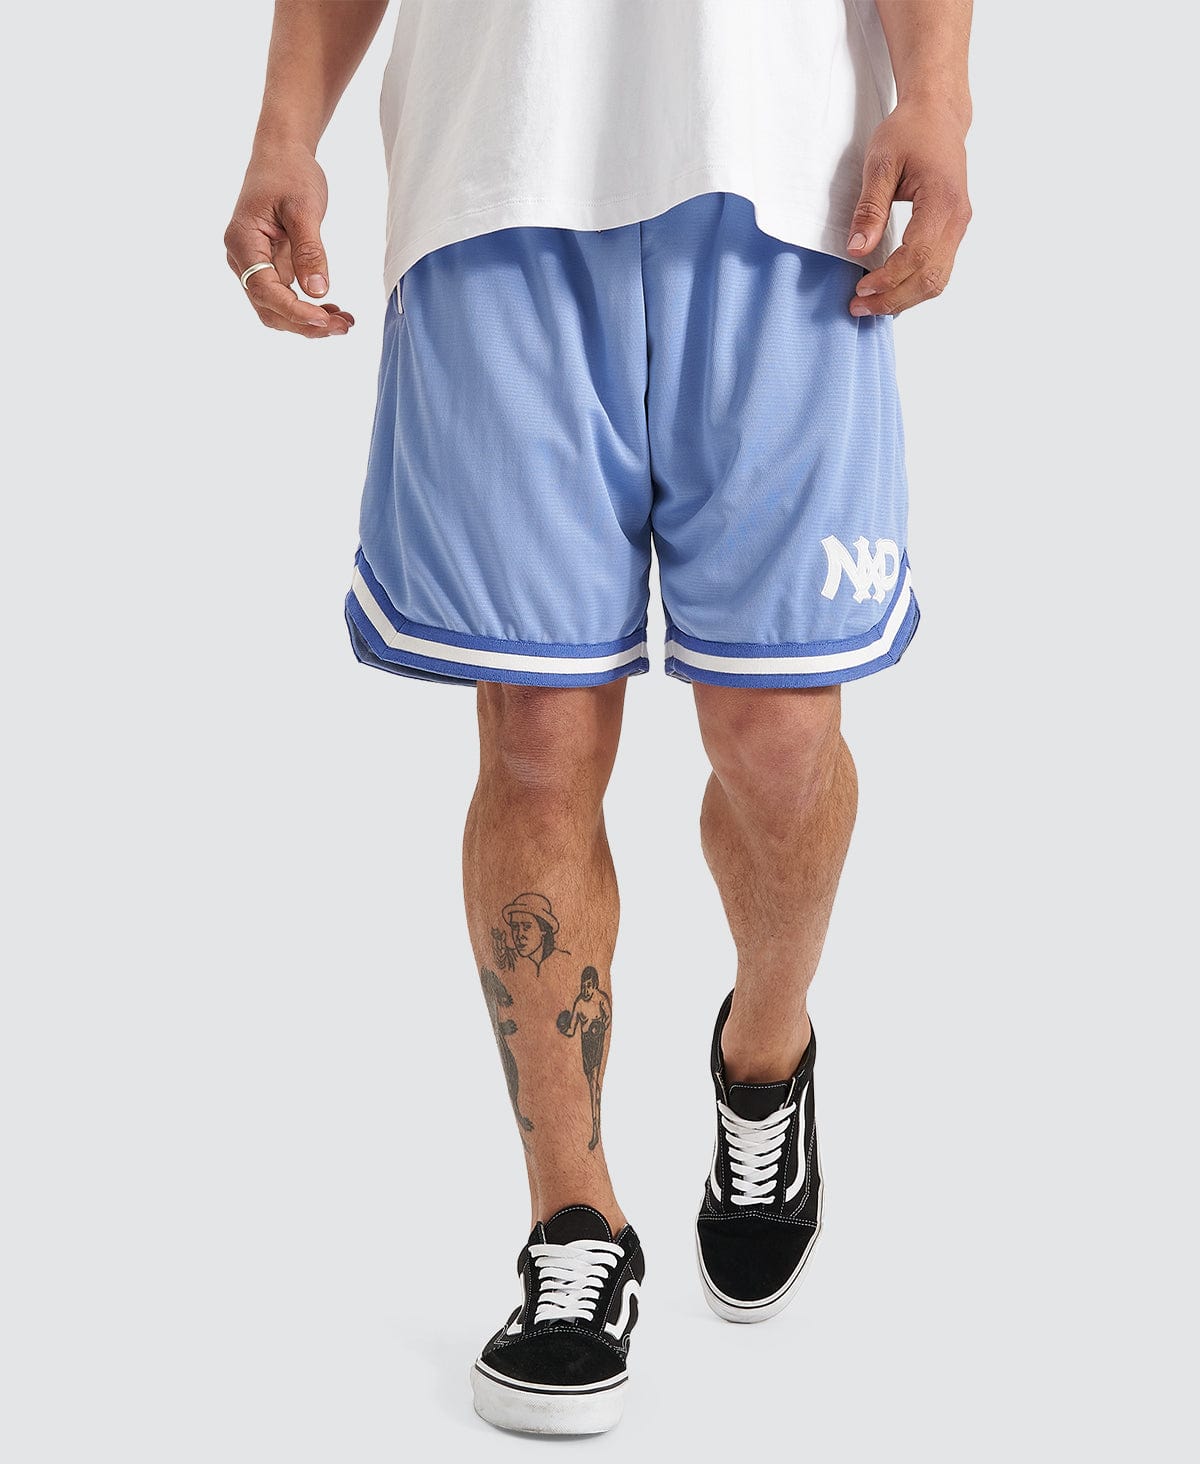 NXP Dual Basketball Shorts Blue